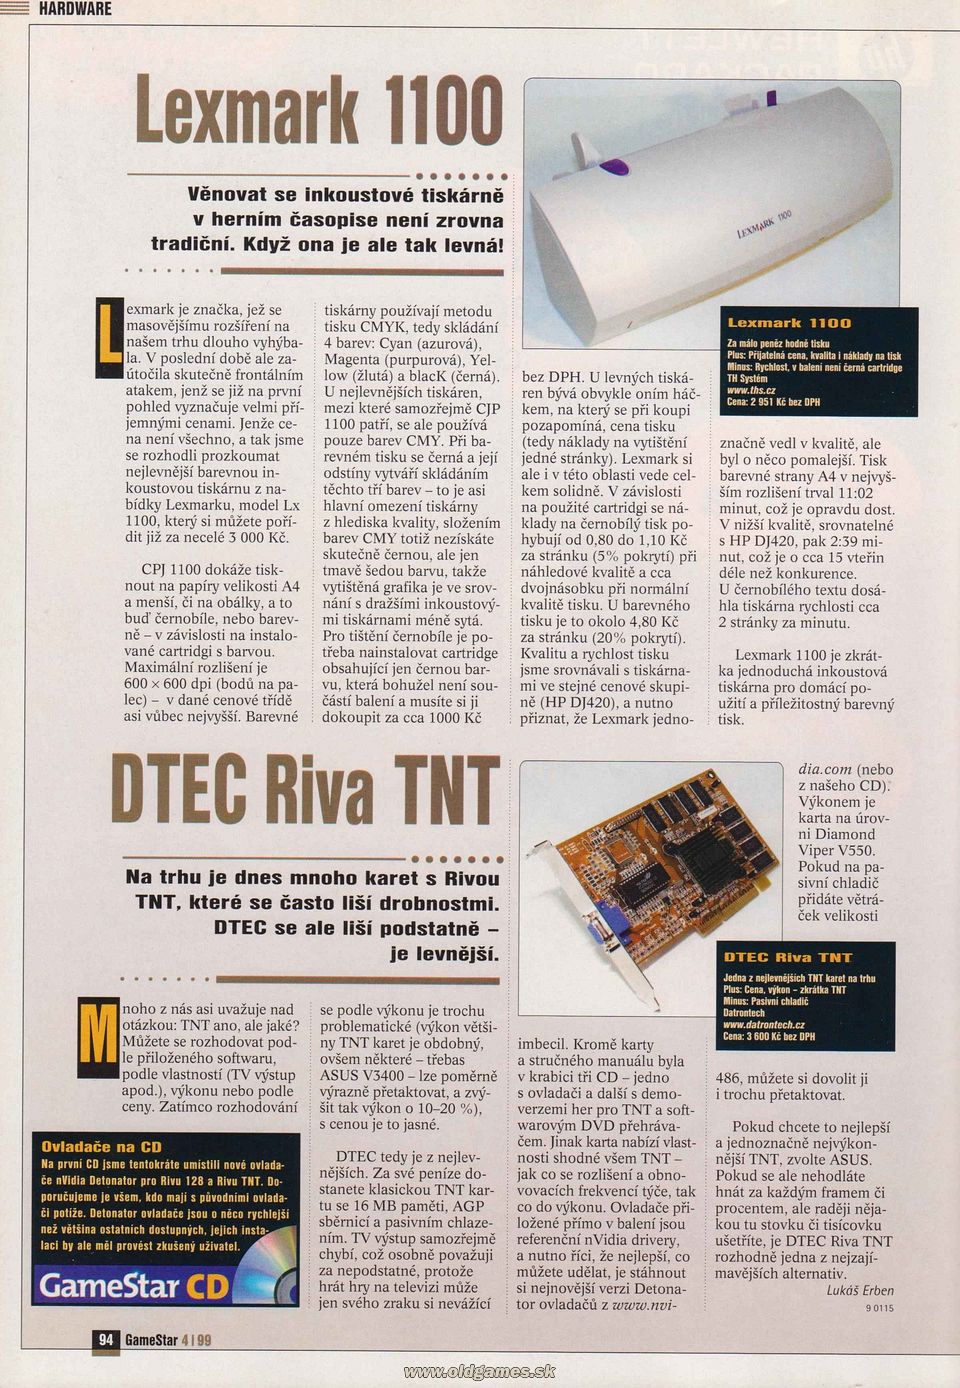 Hardware - Lexmark 1100, DTEC Riva TNT